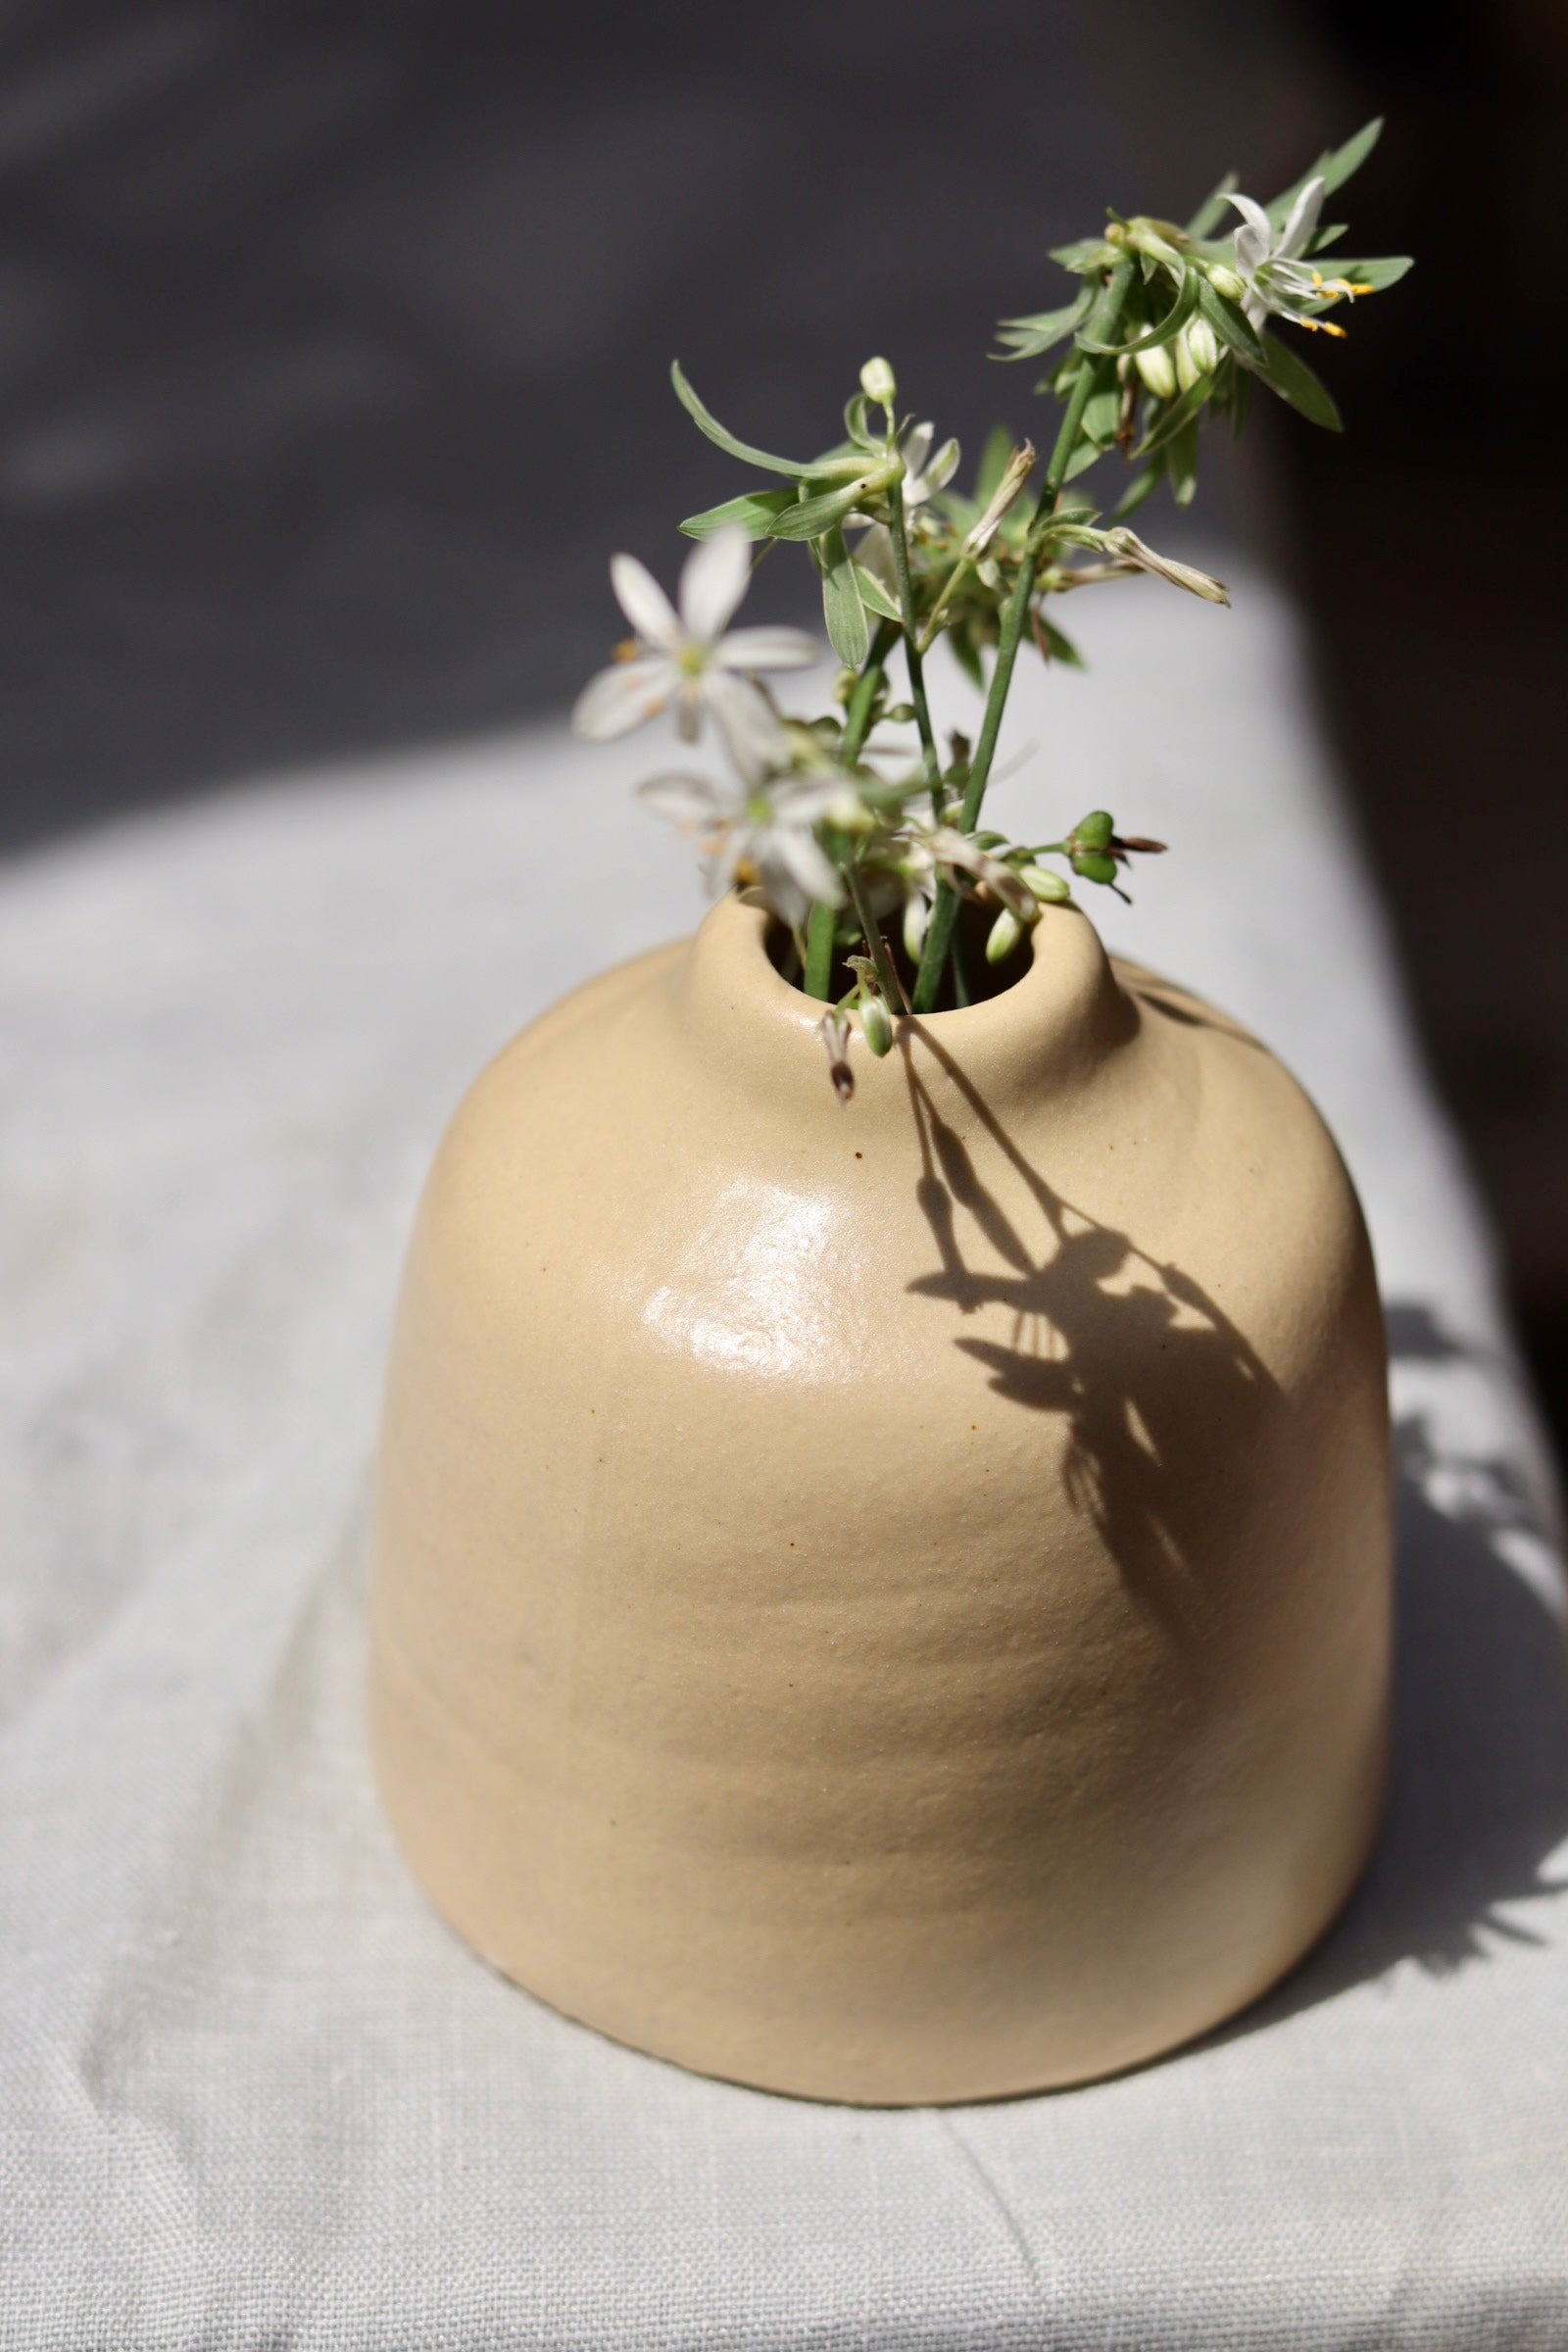 Bud vase with plant